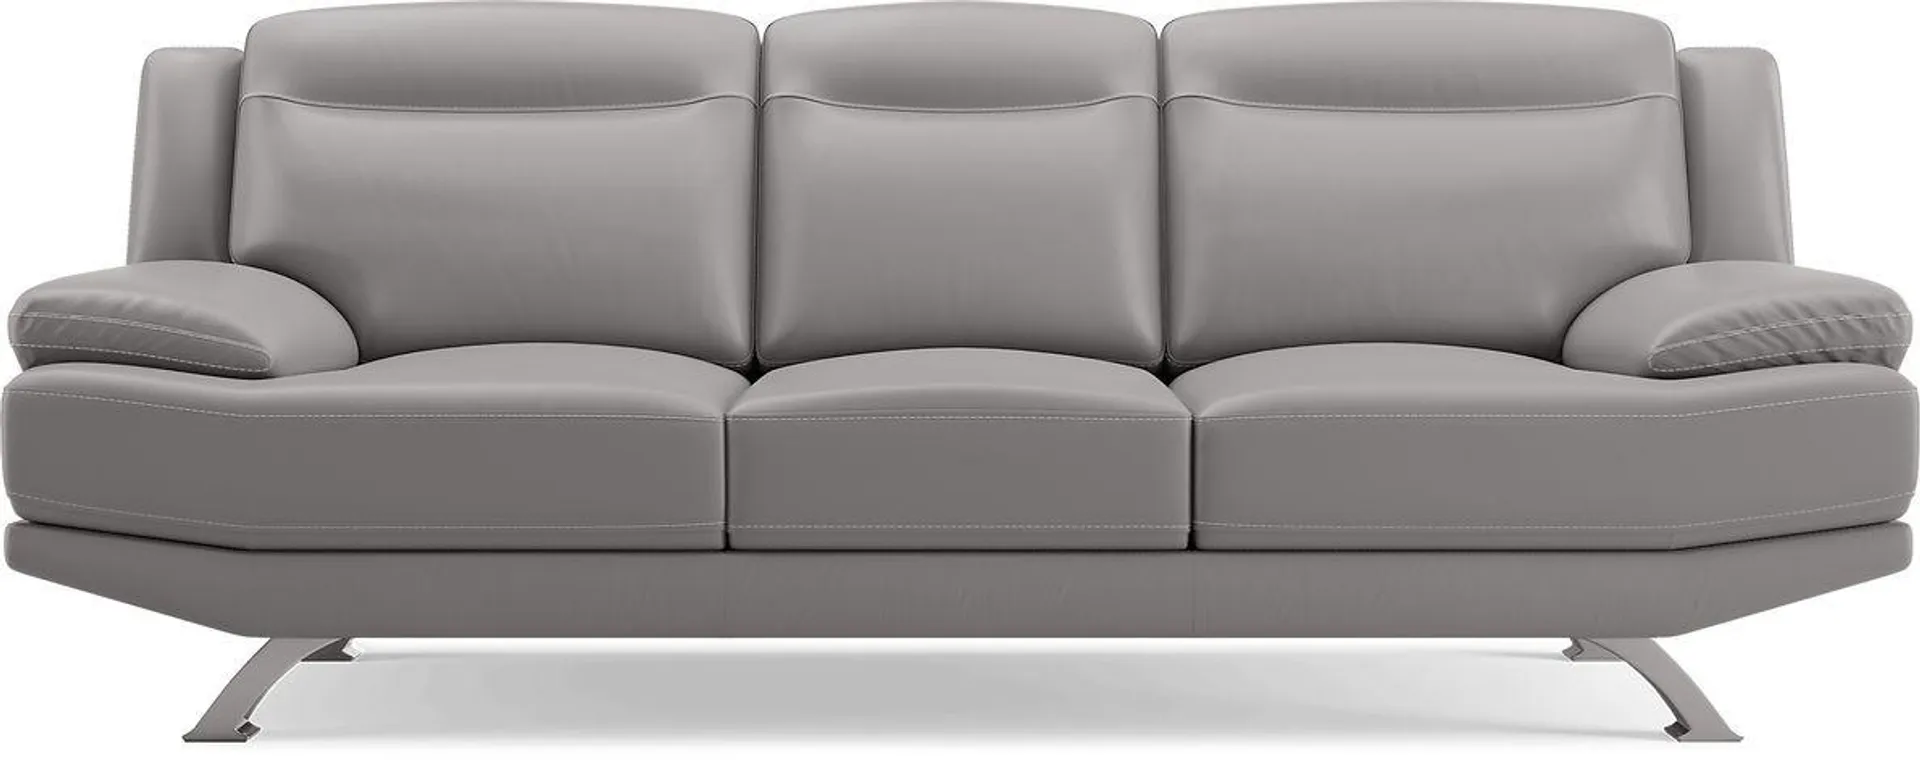 Zamora Leather Sofa